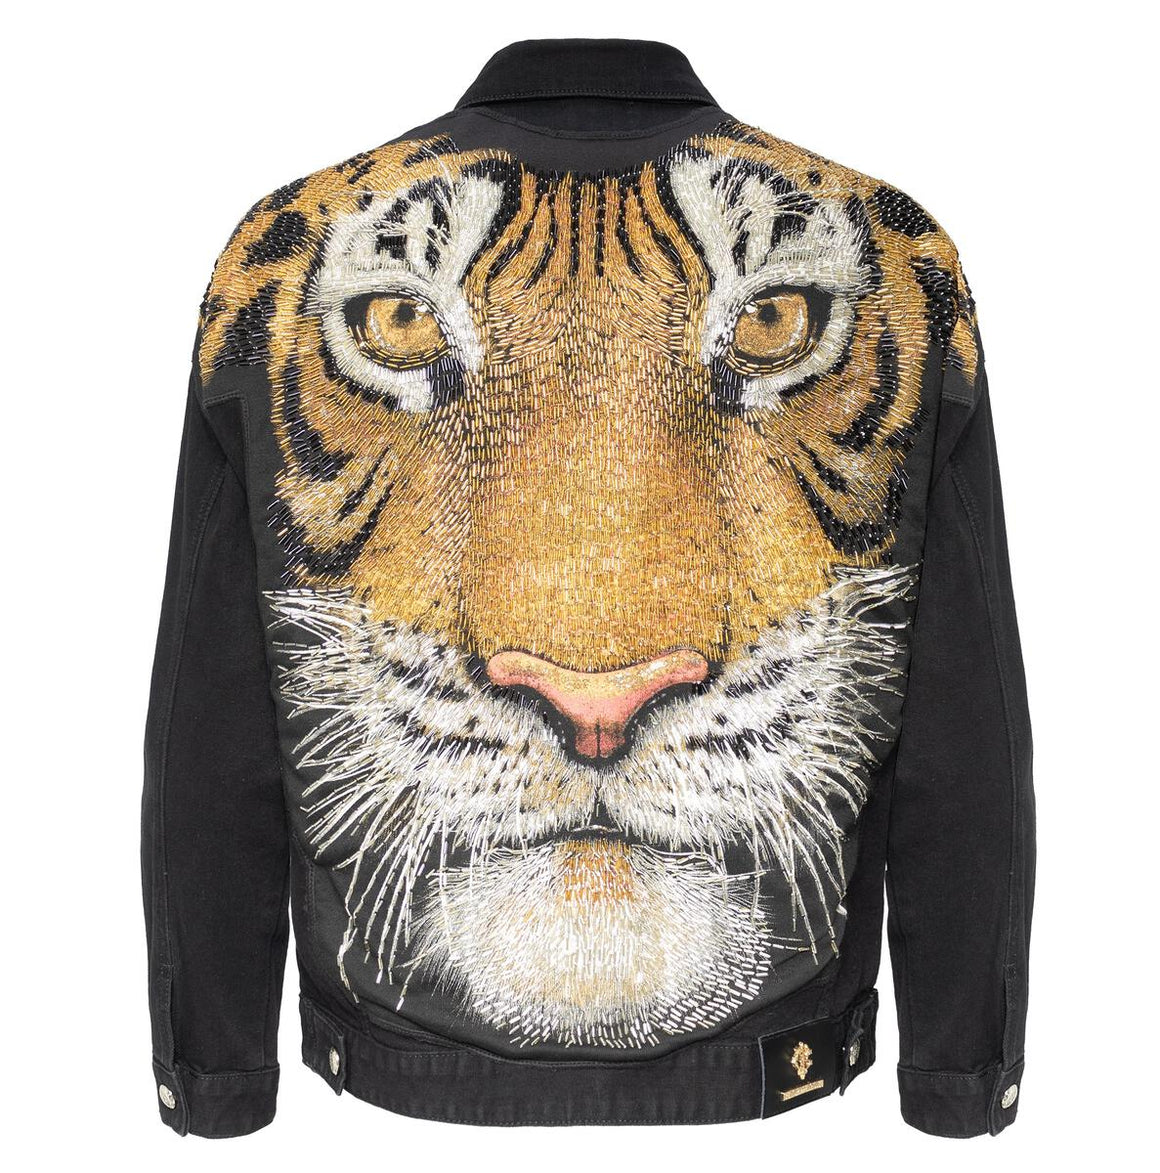 Men's Tiger Fashion Jacket | PJJ600